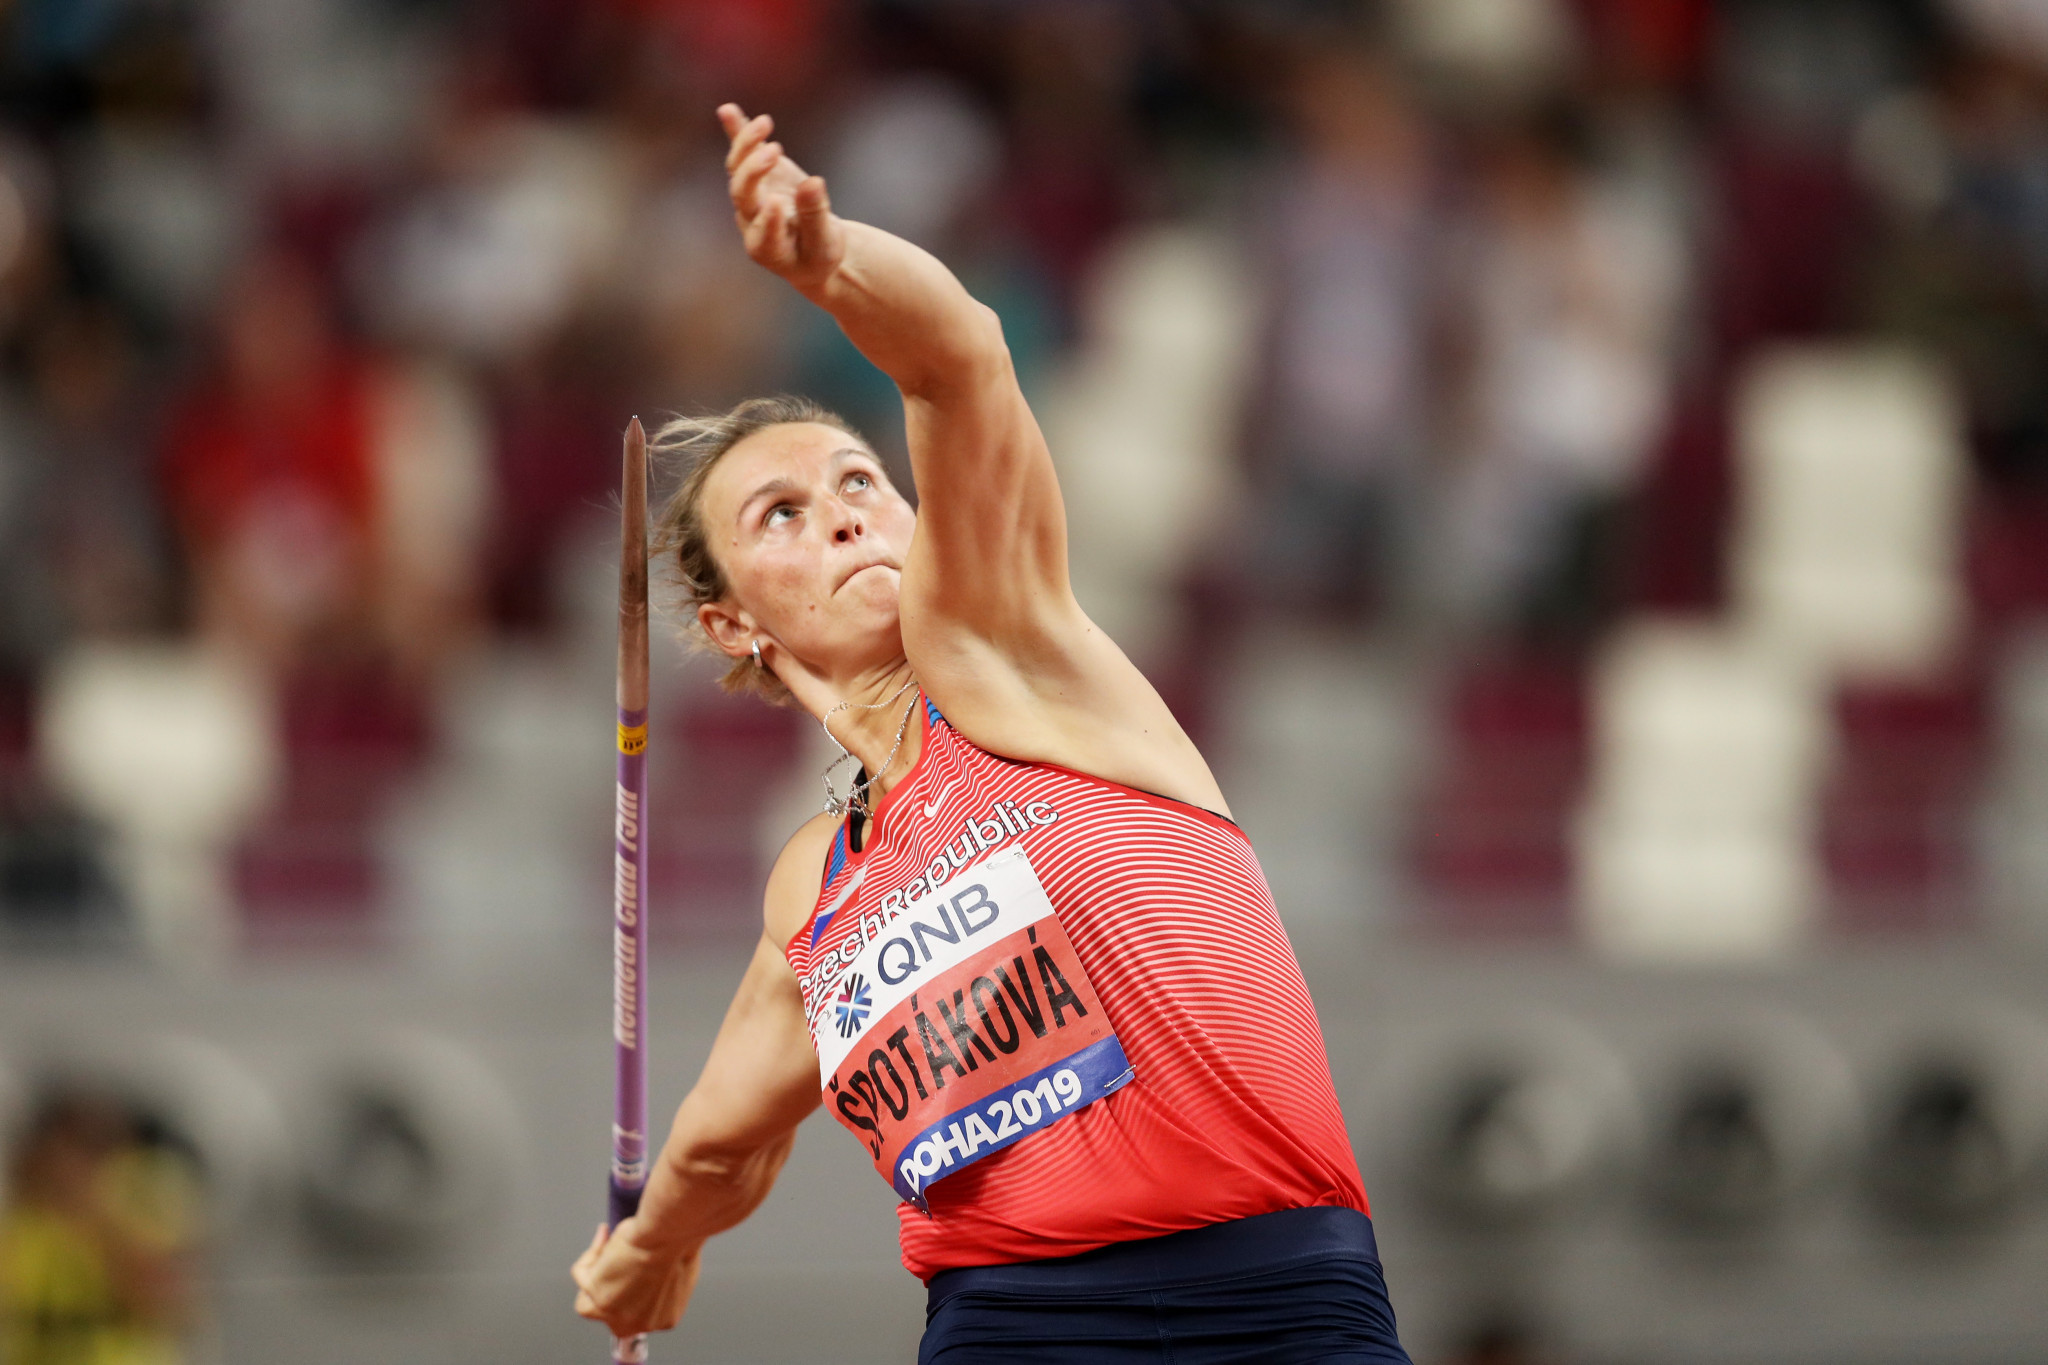 Barbora Špotáková won every major title in women's javelin  ©Getty Images